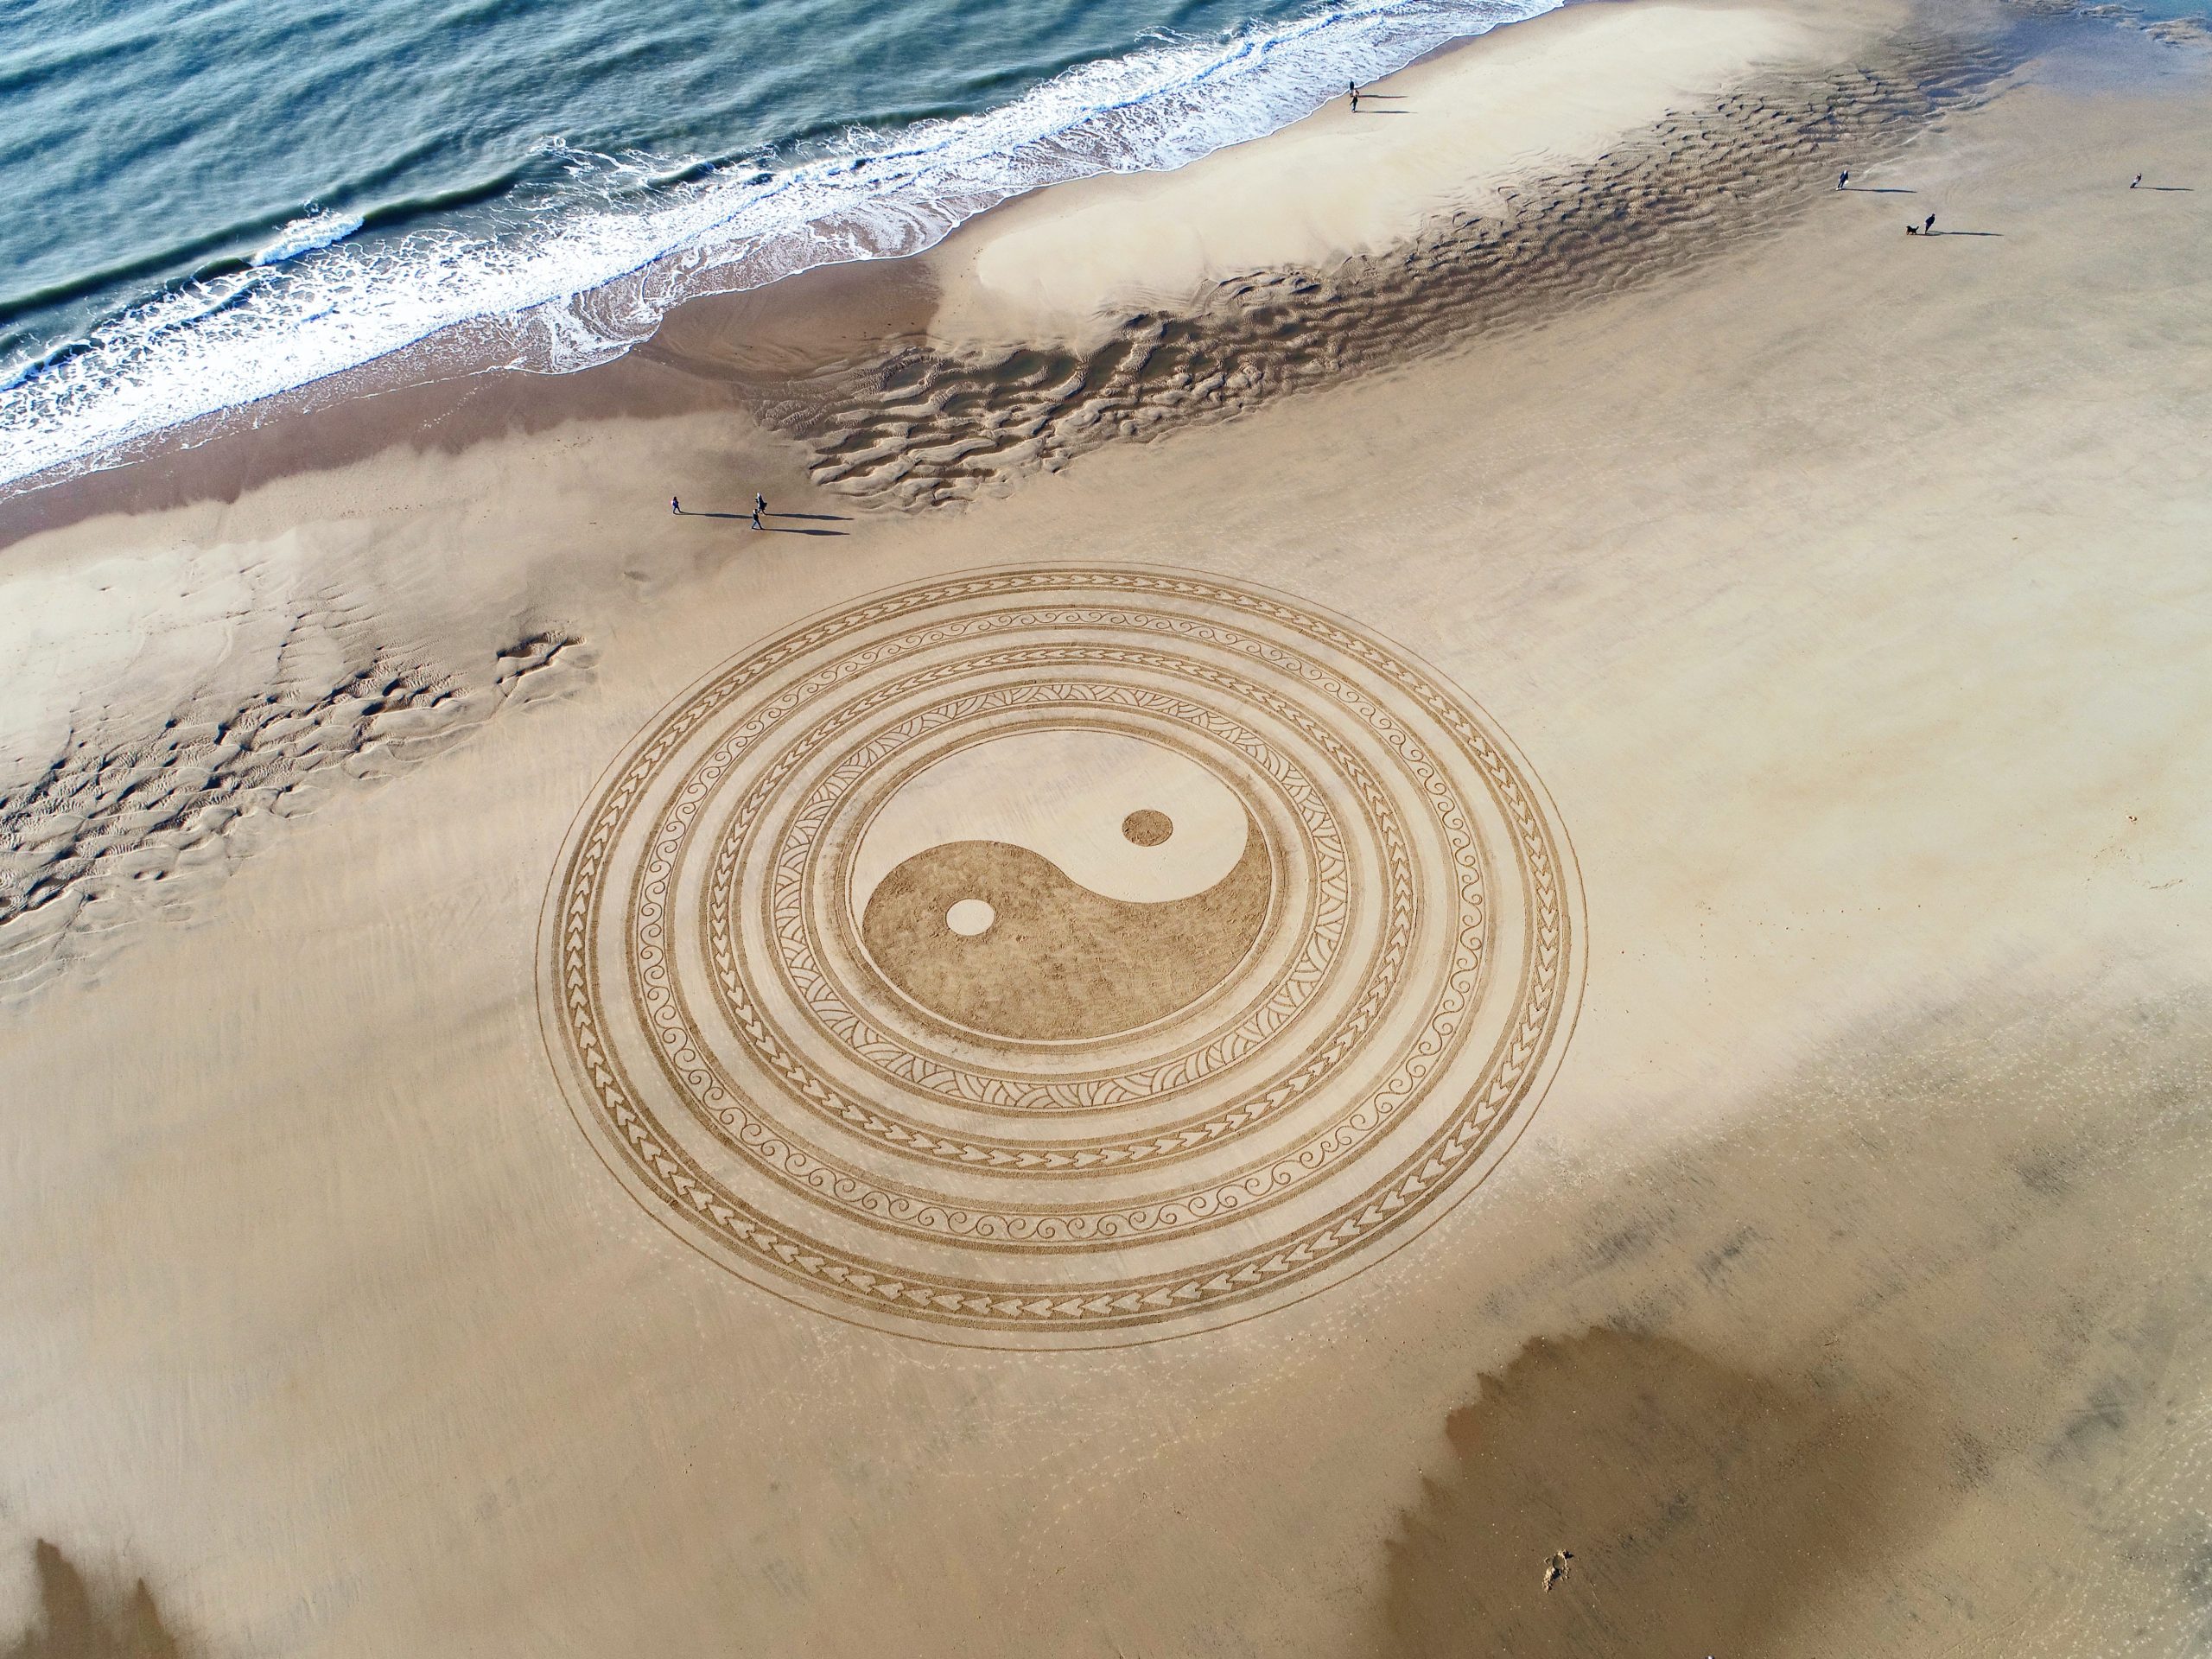 large yin yang symbol in sand on beach land art